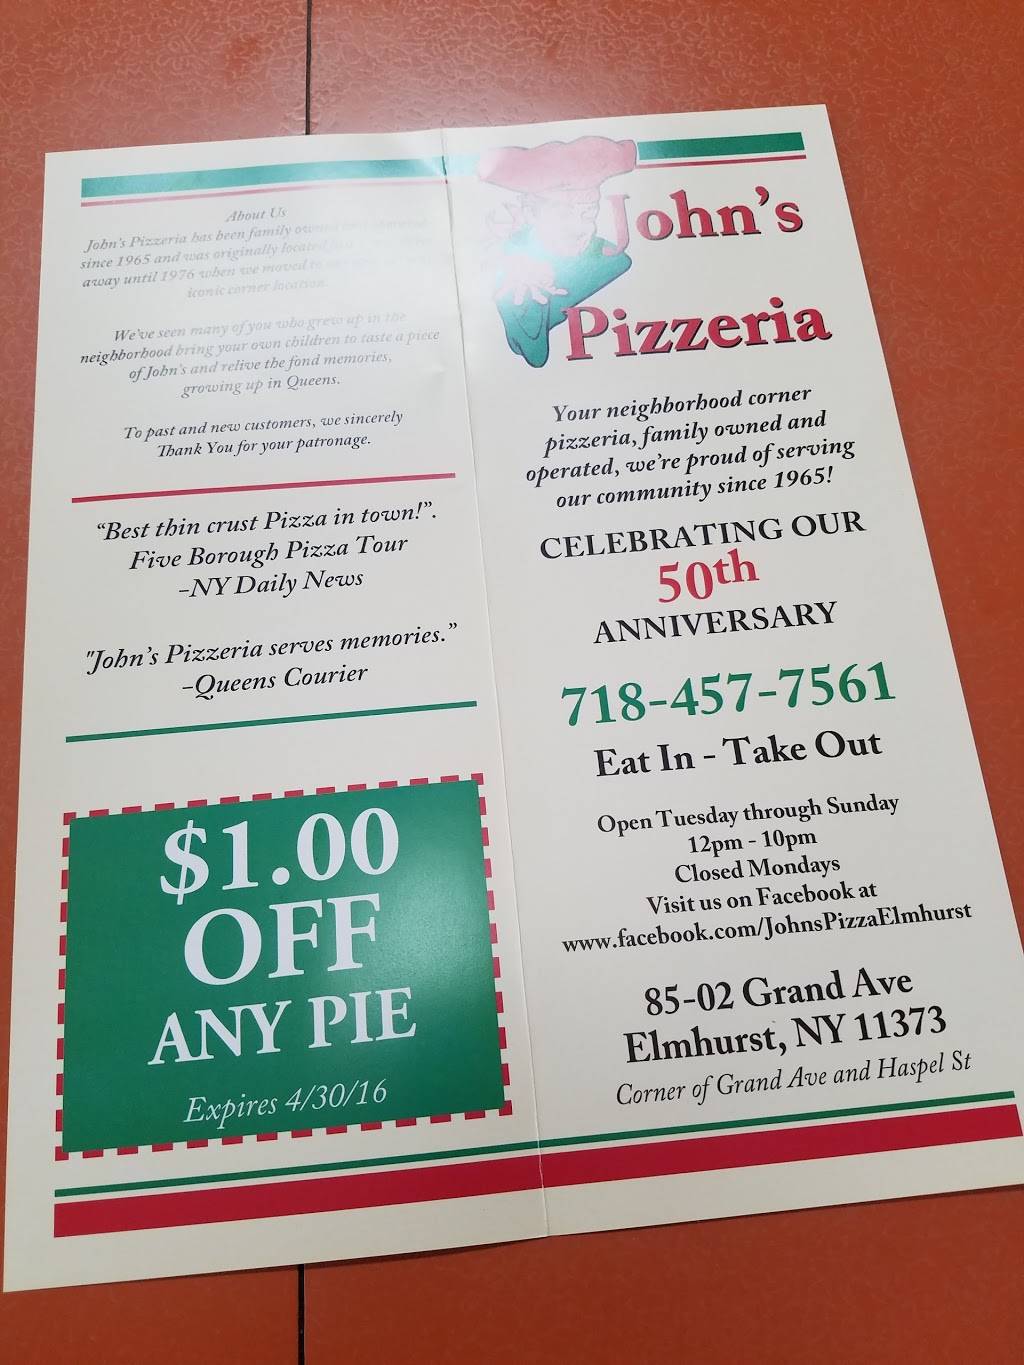 Johns Pizzeria | restaurant | 8502 Grand Ave, Elmhurst, NY 11373, USA | 7184577561 OR +1 718-457-7561